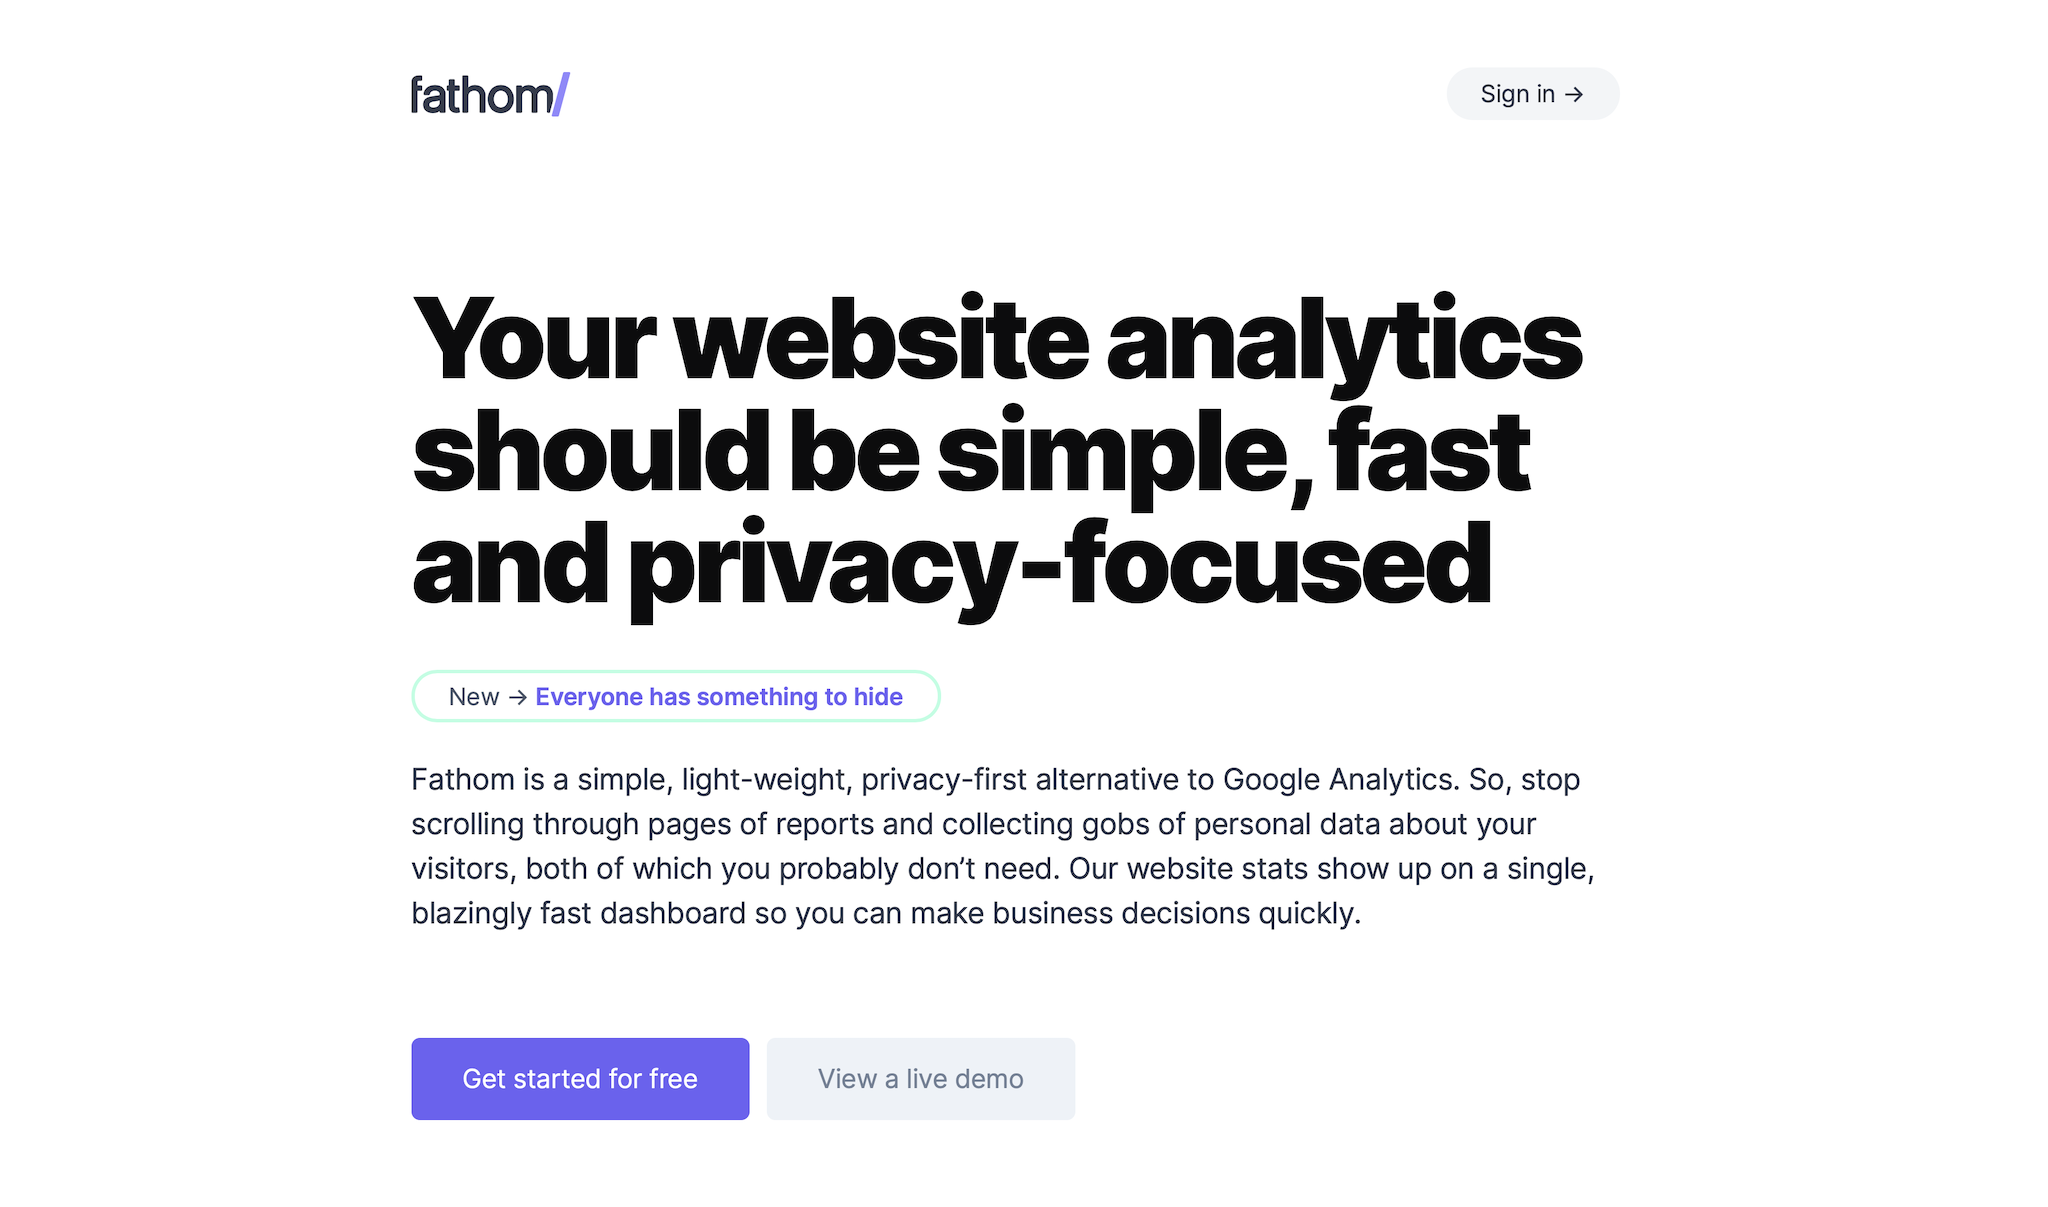 Fathom Analytics provides privacy-focused web analytics.